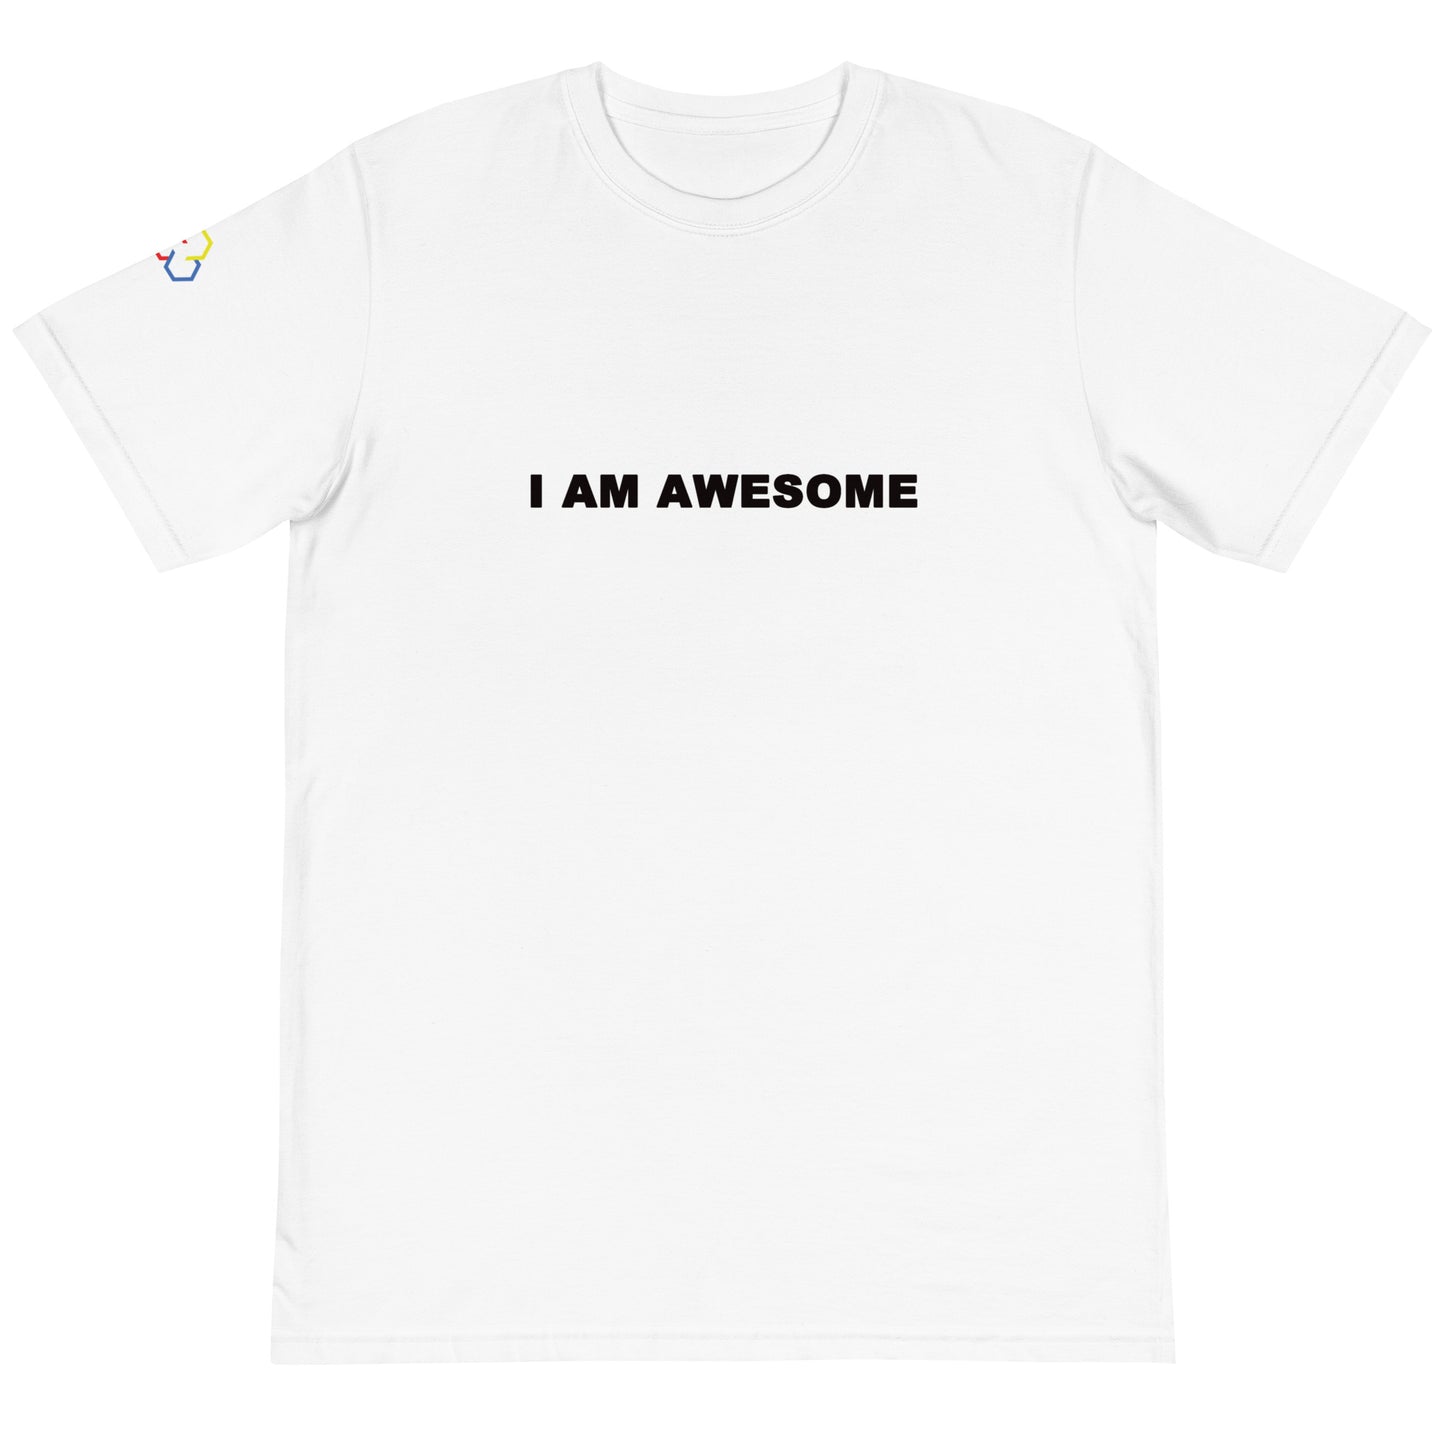 I AM AWESOME - Organic T-Shirt